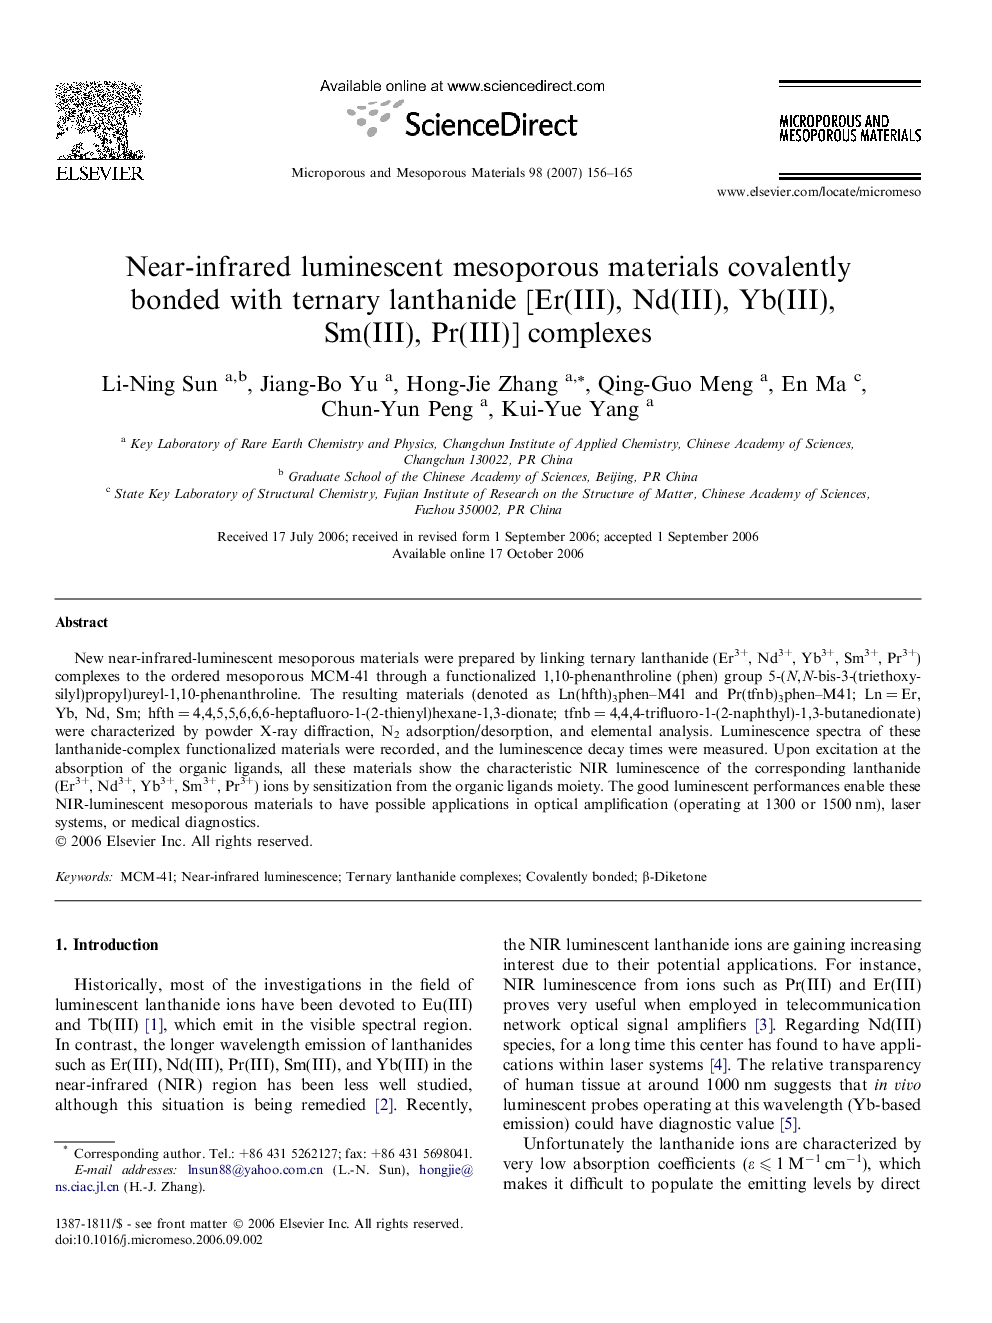 Near-infrared luminescent mesoporous materials covalently bonded with ternary lanthanide [Er(III), Nd(III), Yb(III), Sm(III), Pr(III)] complexes